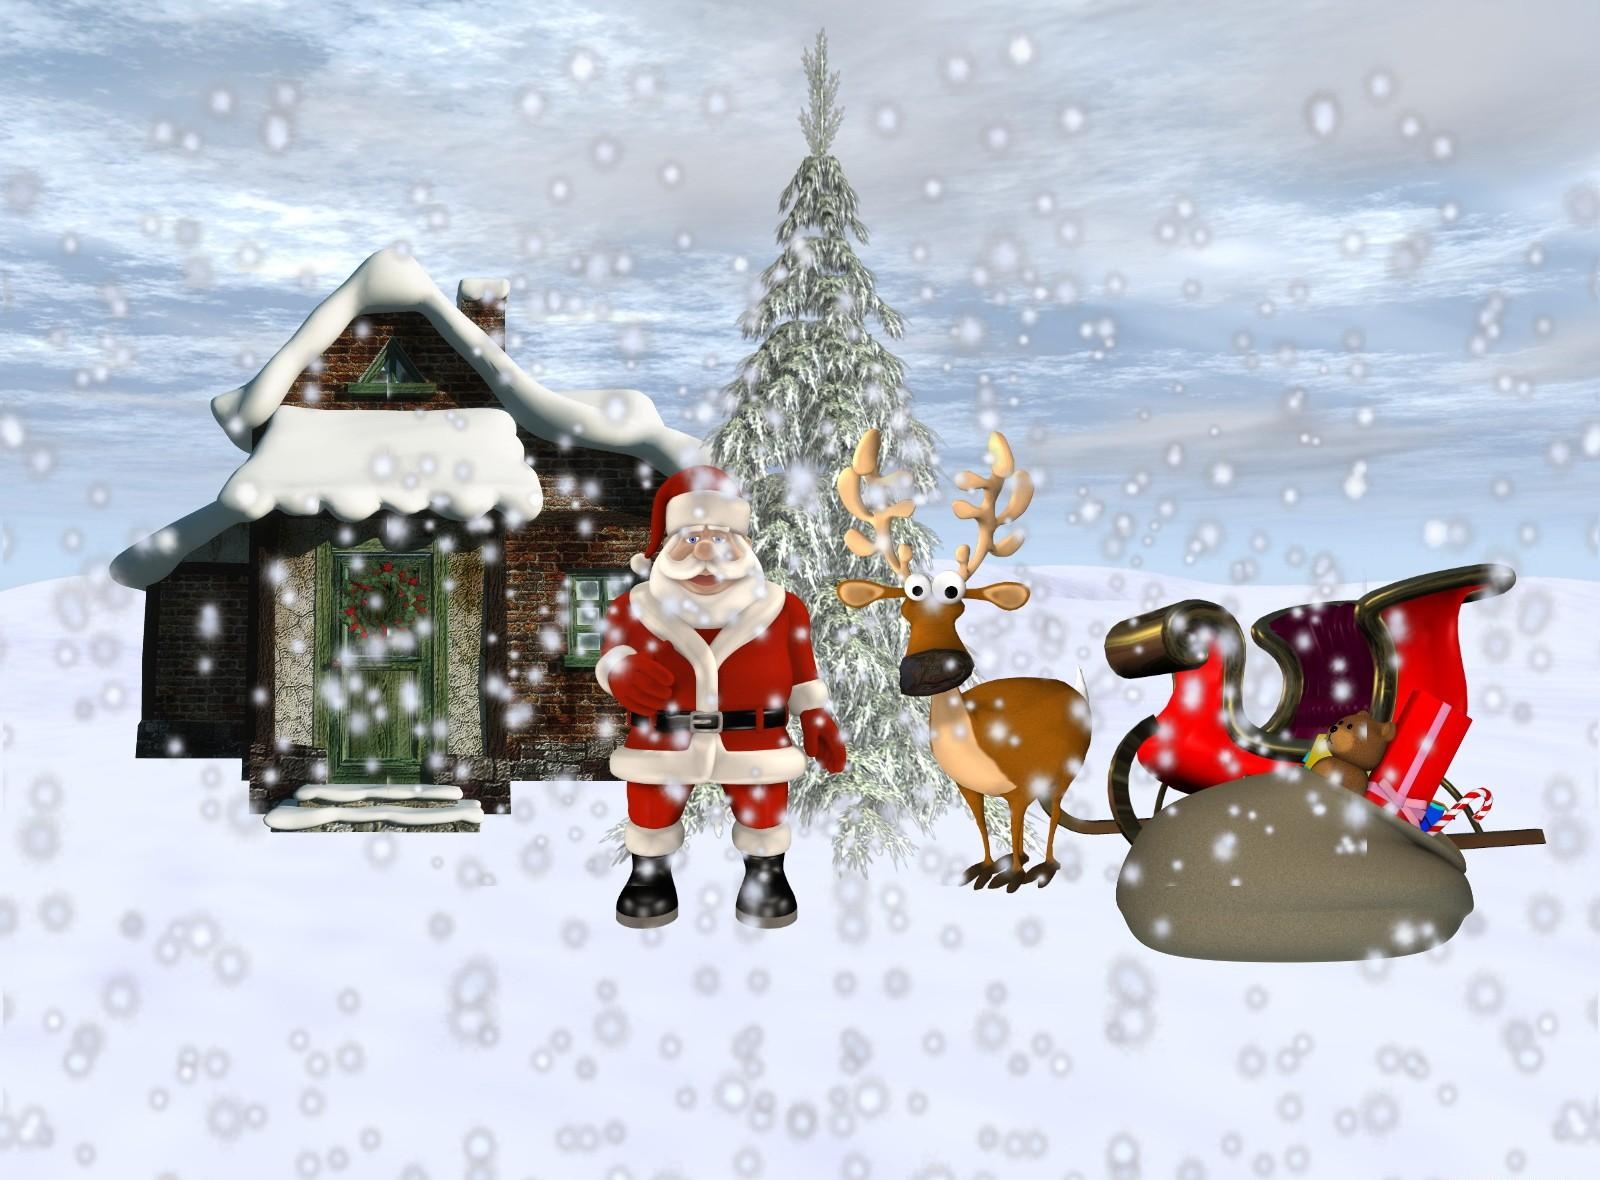 santa claus, deer, holidays, snow, house, christmas tree, sleigh, sledge, presents, gifts